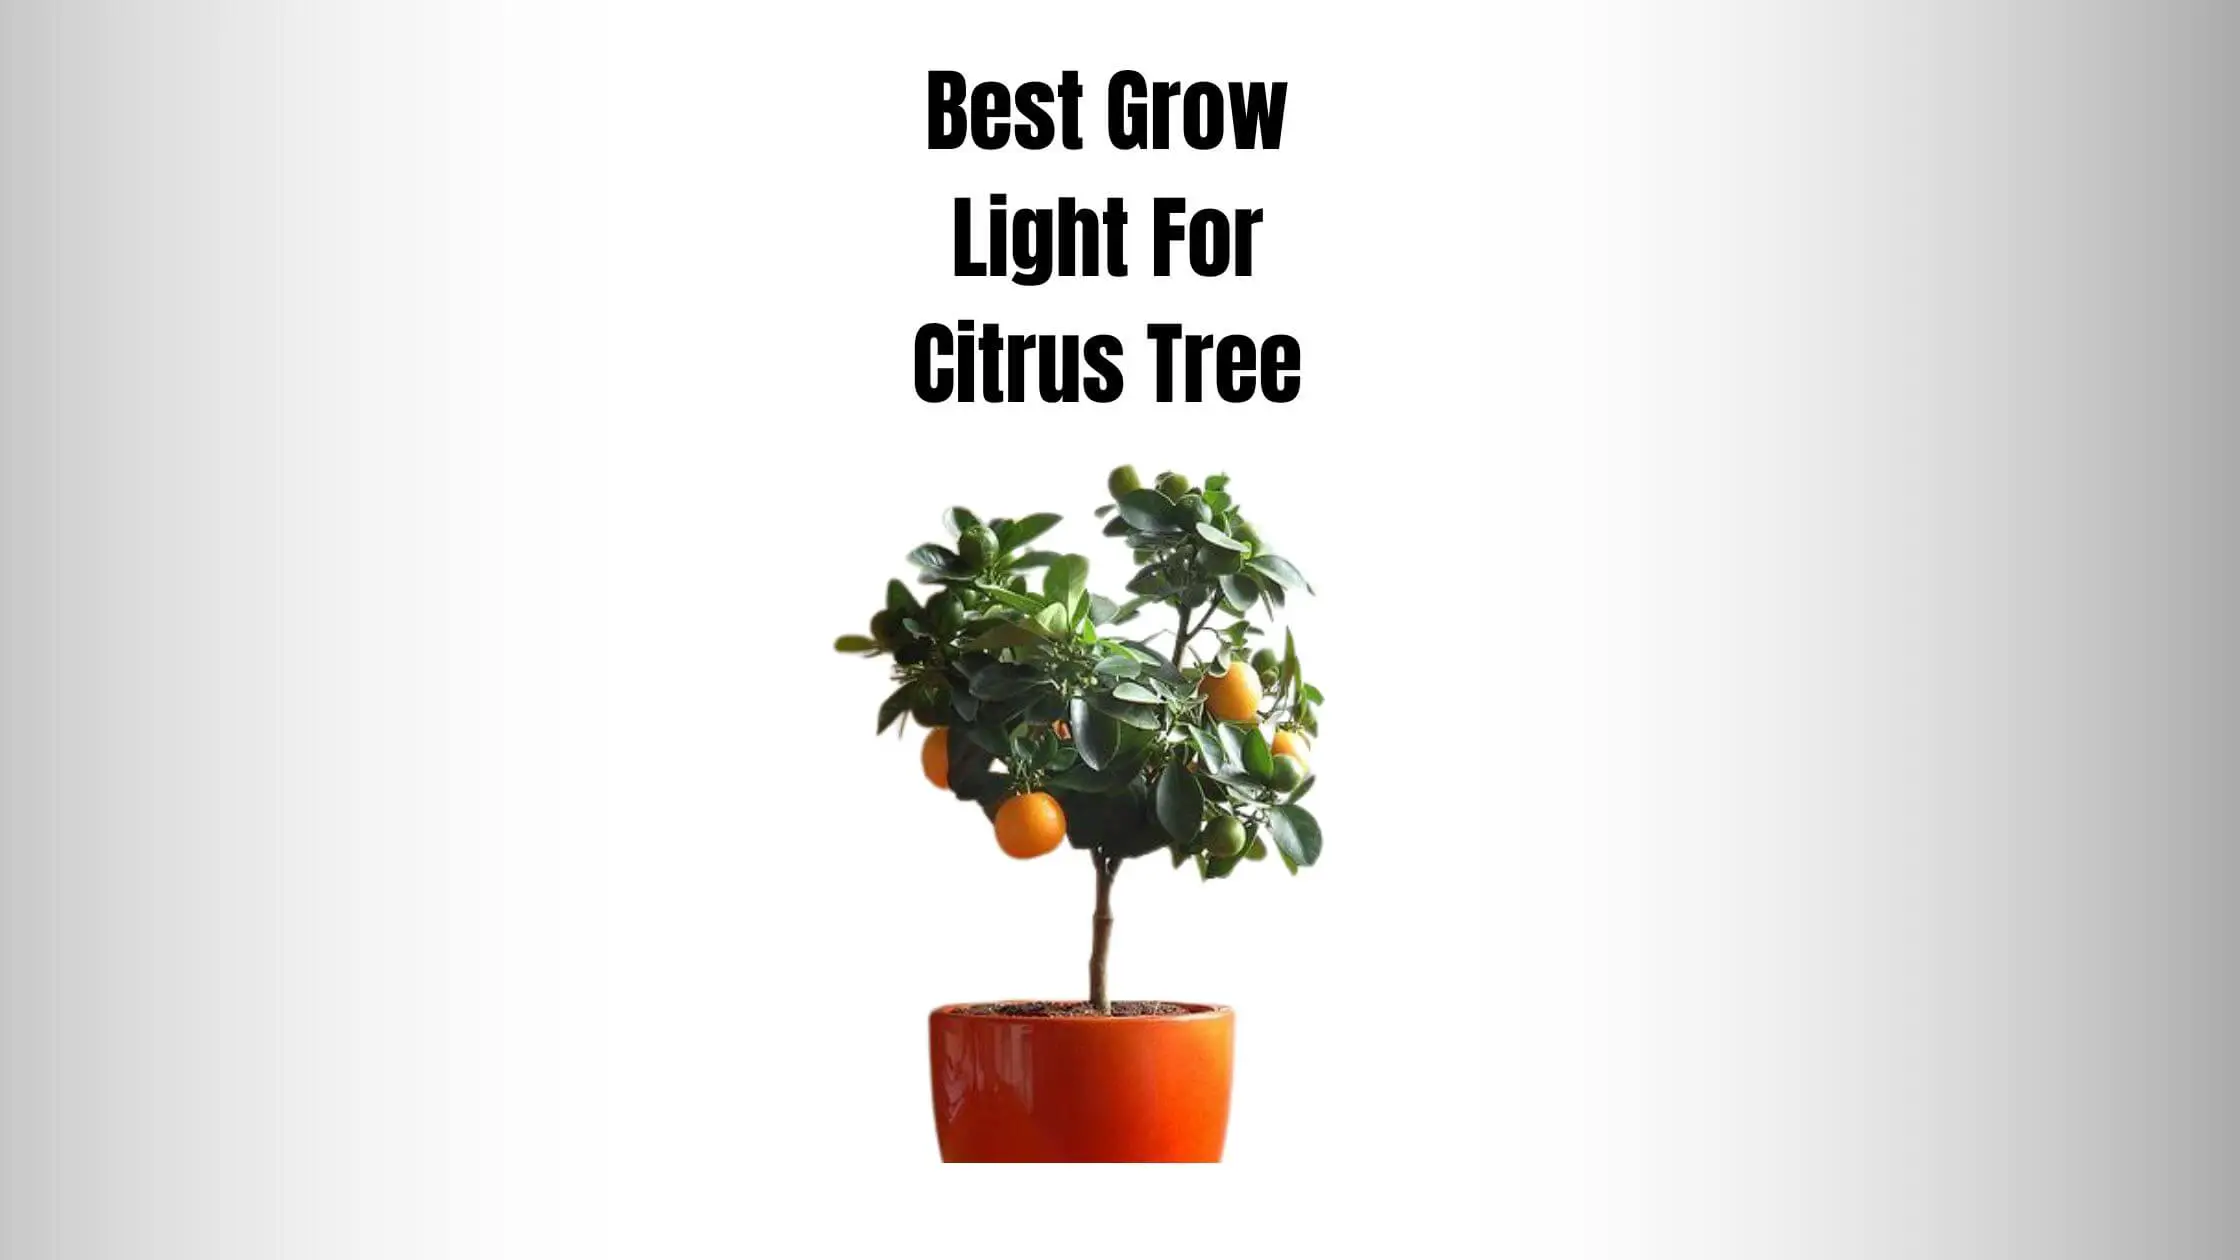 BEST GROW LIGHT FOR CITRUS TREE